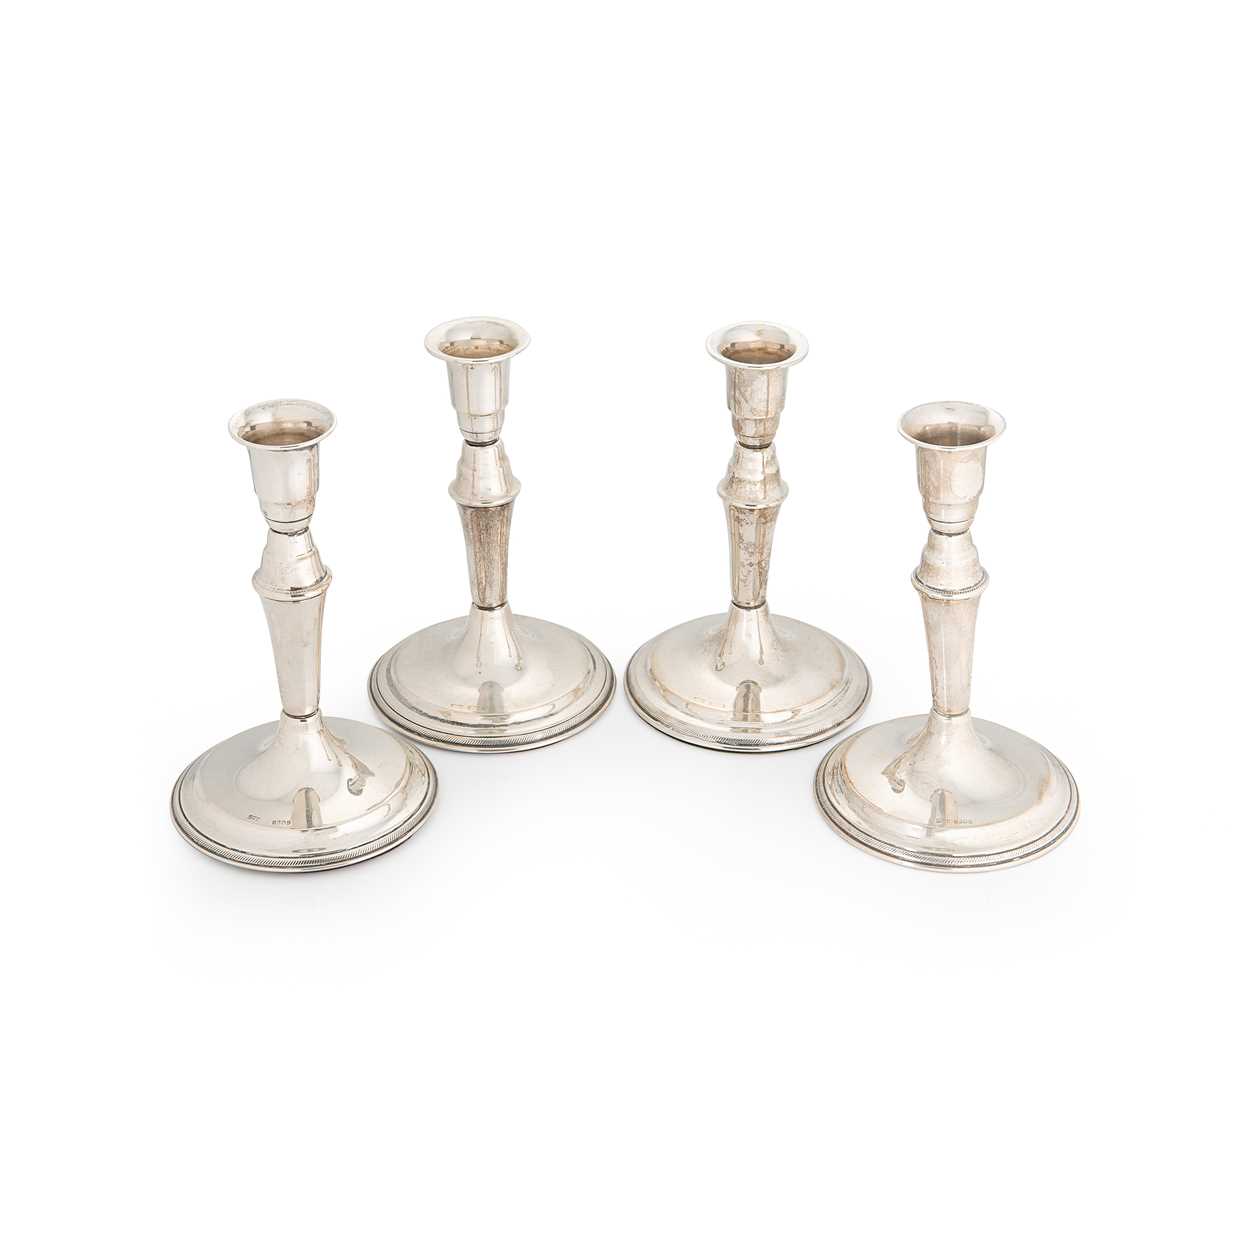 A set of 4 mid-20th century Danish metalwares candlesticks,